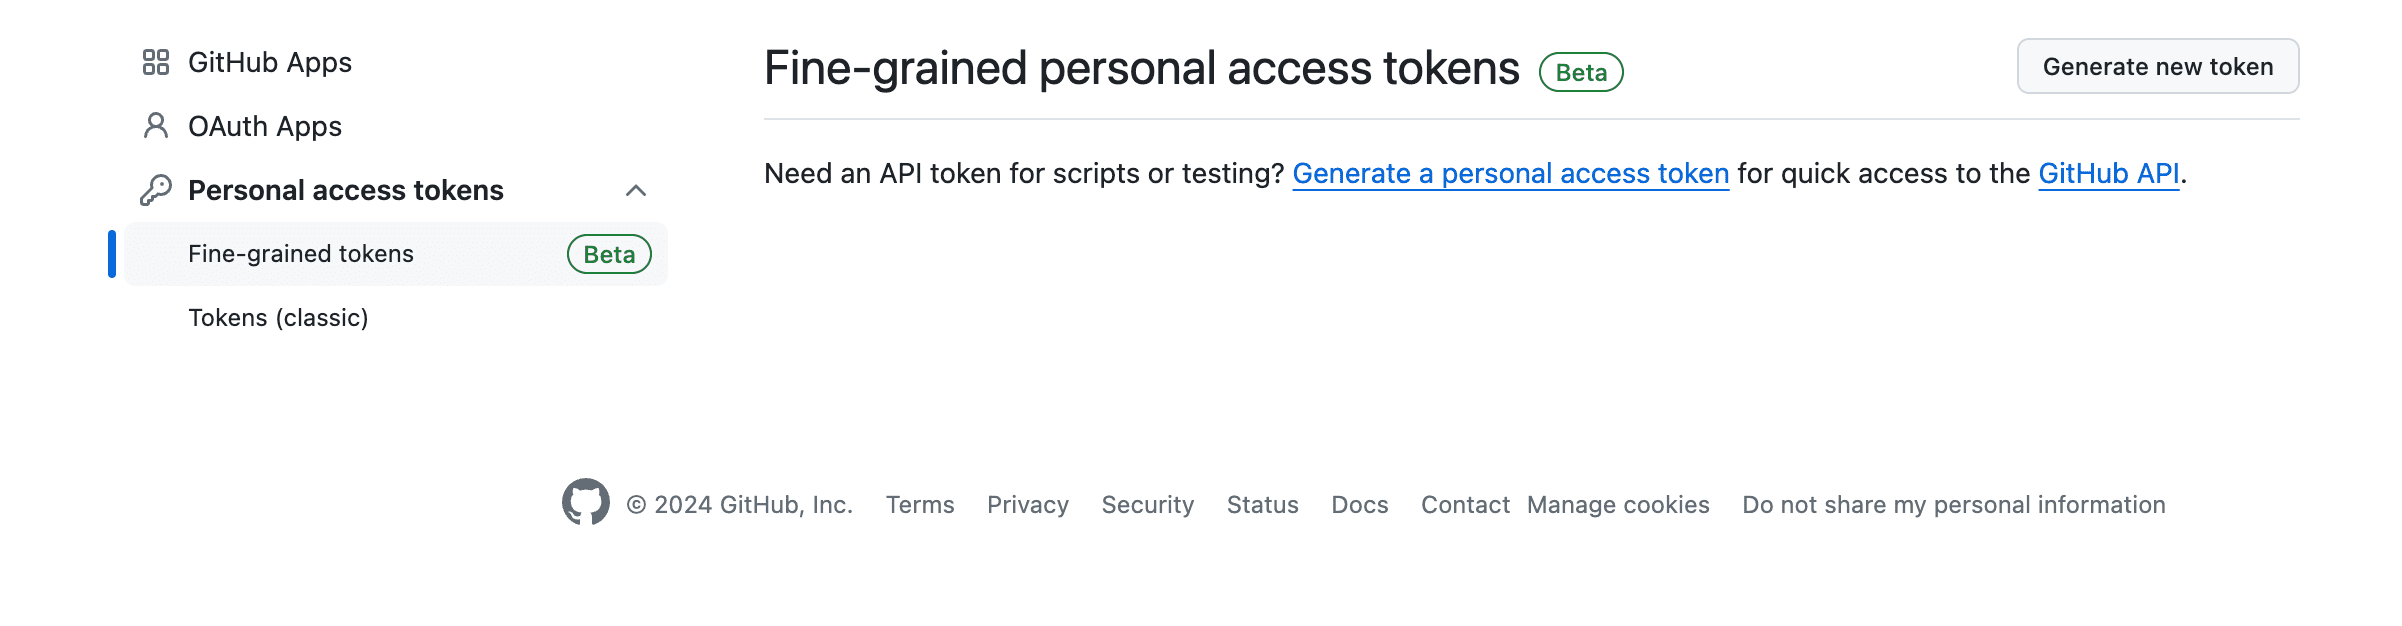 Generating new fine-grained token in GitHub